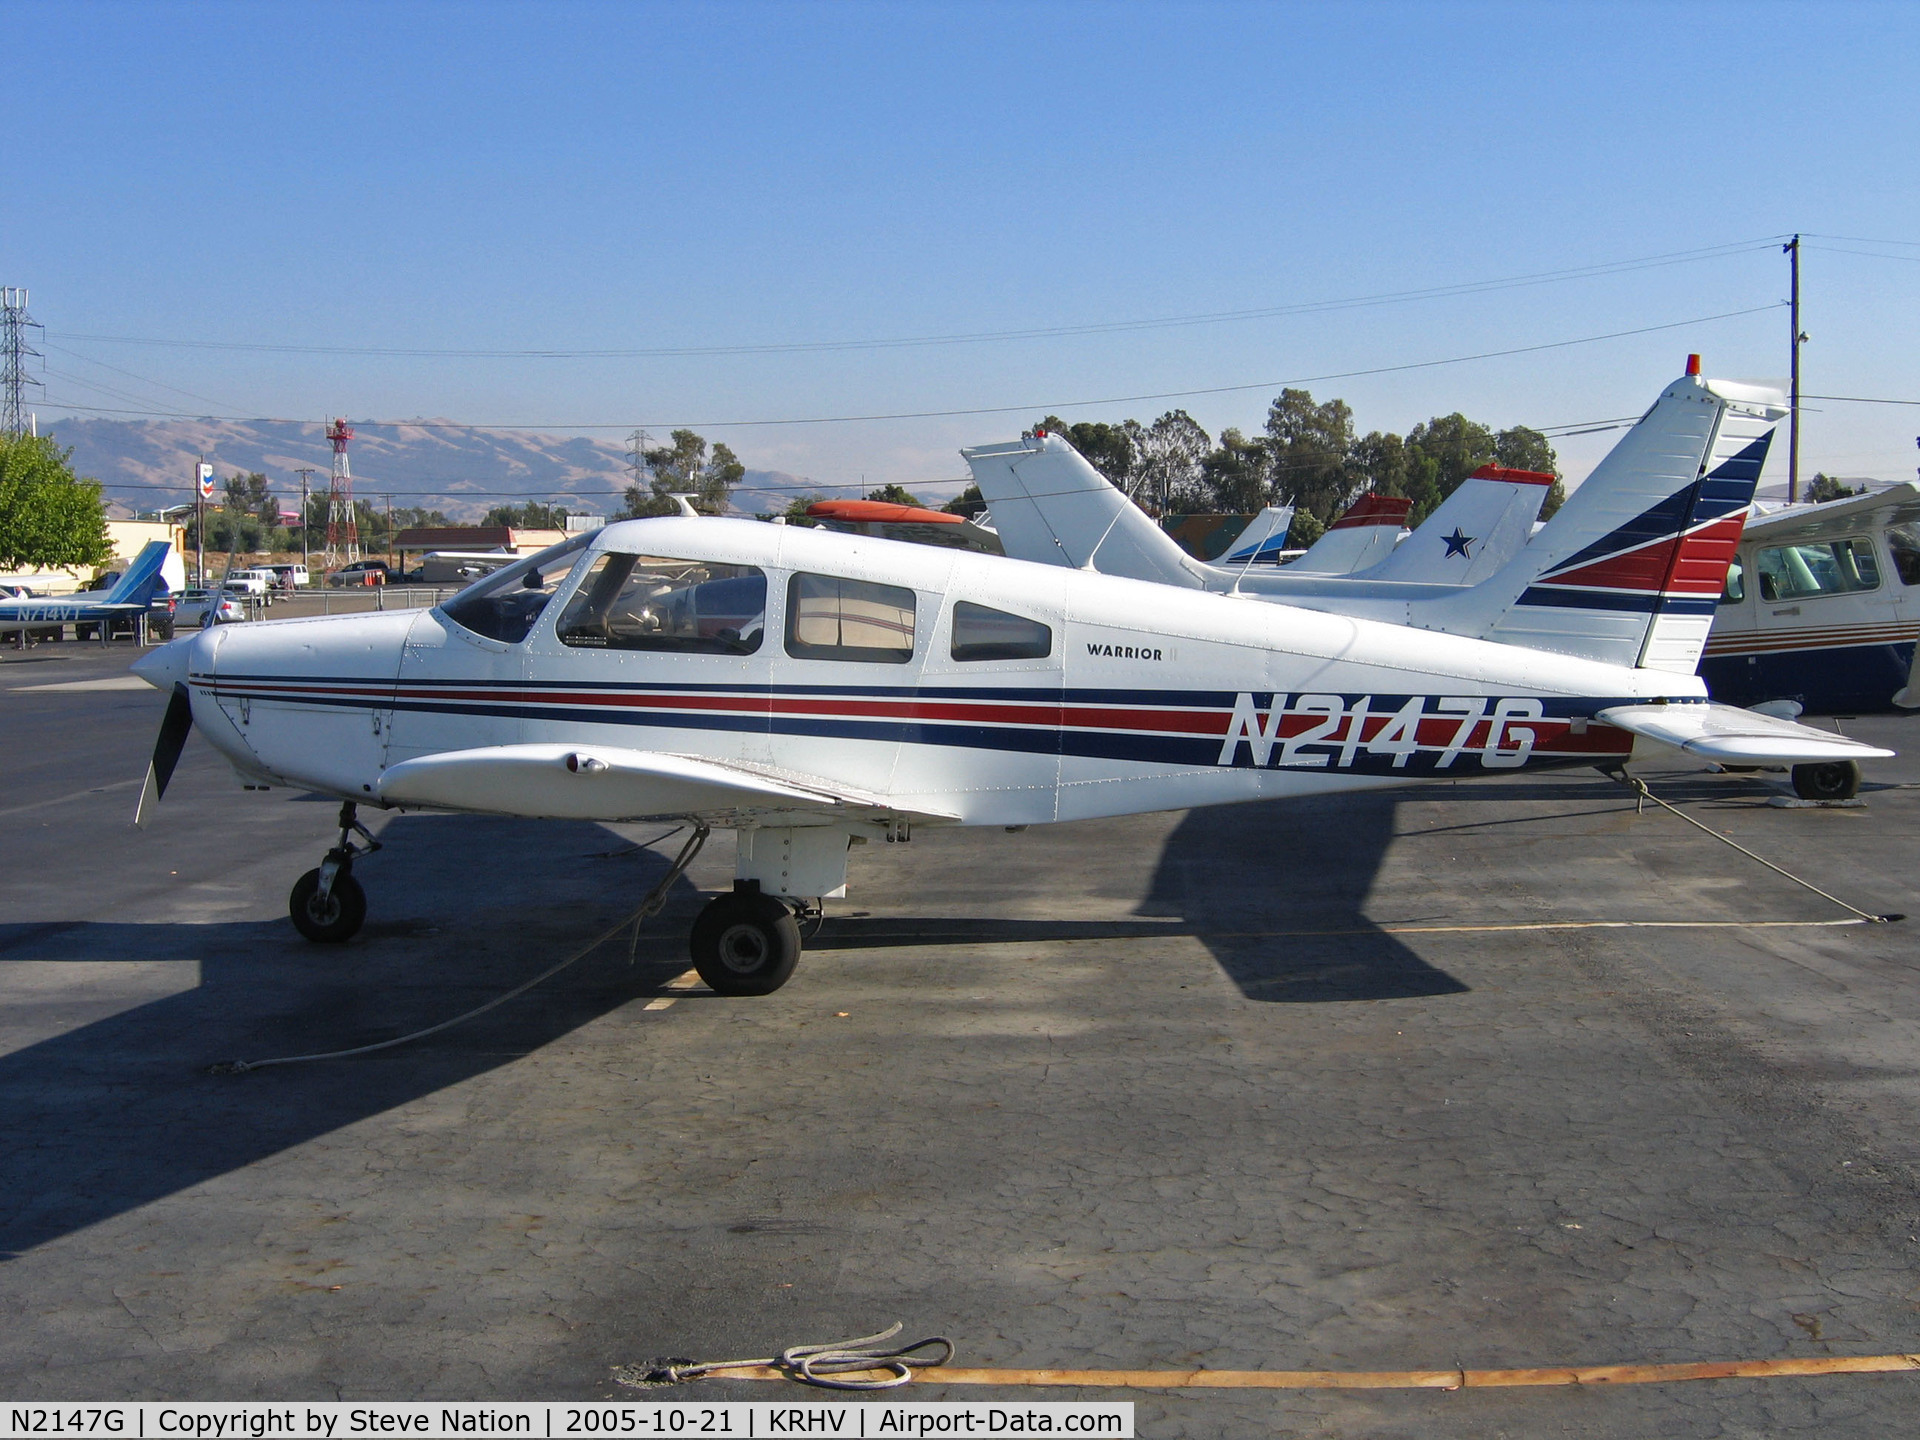 N2147G, 1978 Piper PA-28-161 C/N 28-7916178, Locally-based 1978 Piper PA-28-161 in brilliant sunshine @ Reid-Hillview (originally Reid's Hillview) Airport, San Jose, CA